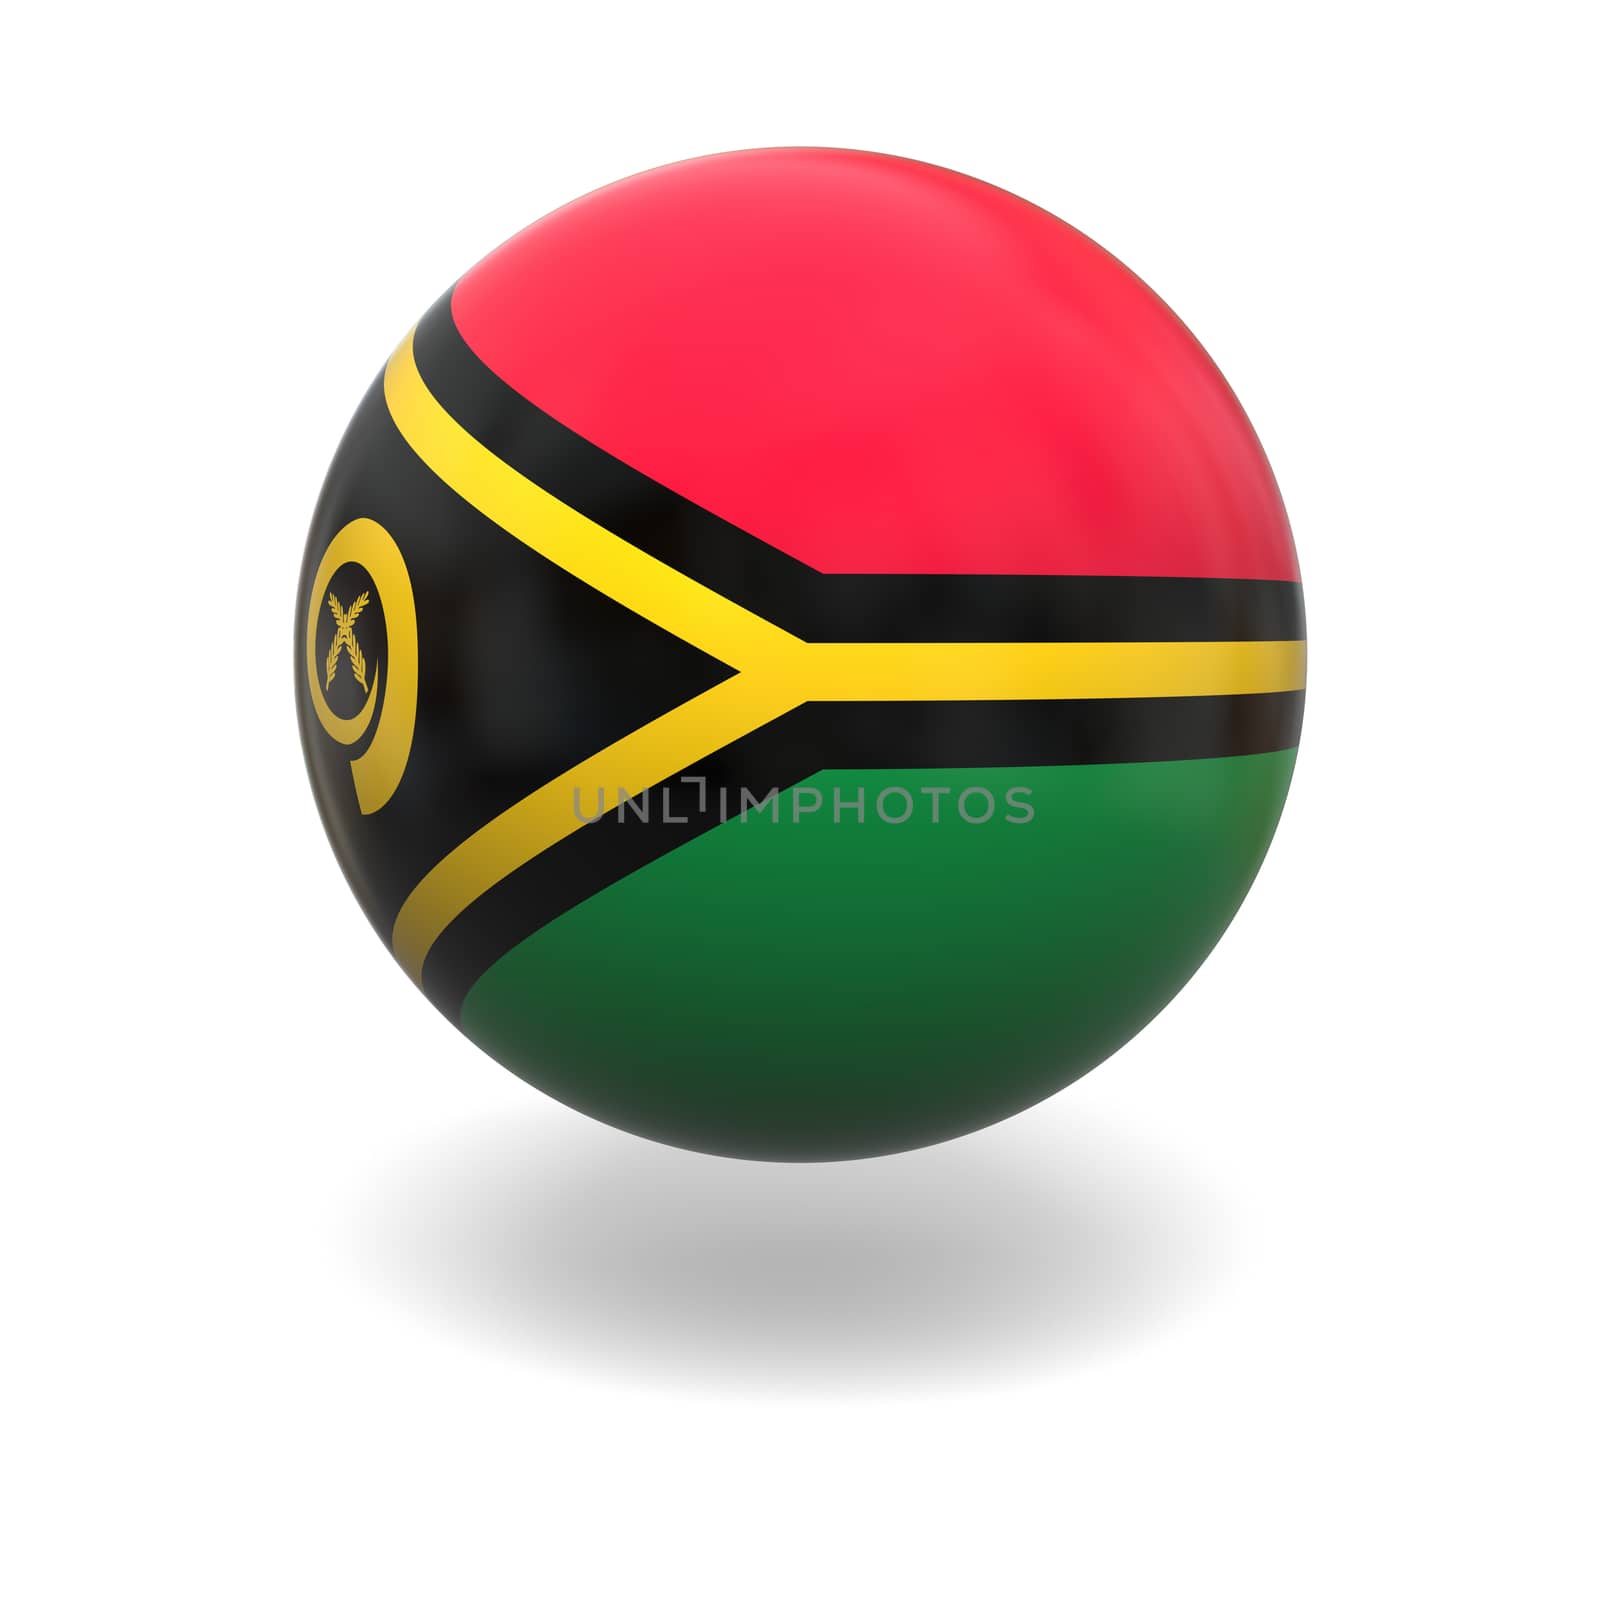 Vanuatu flag by Harvepino